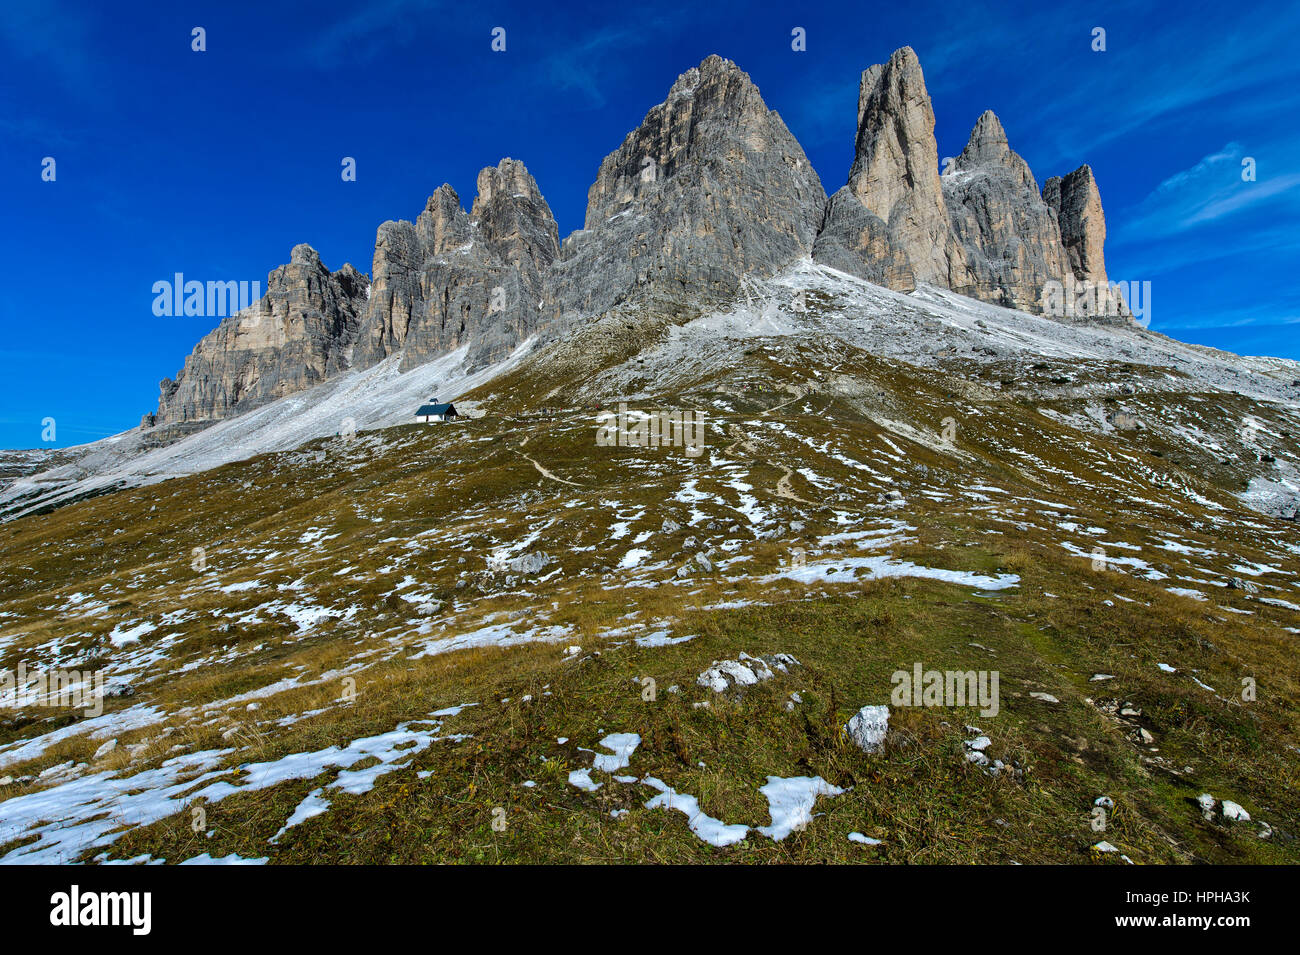 South face of the Three Peaks Mountains, Tre Cime di Lavaredo, Drei Zinnen, Sexten Dolomites, South Tyrol, Trentino-Alto Adige, Italy Stock Photo